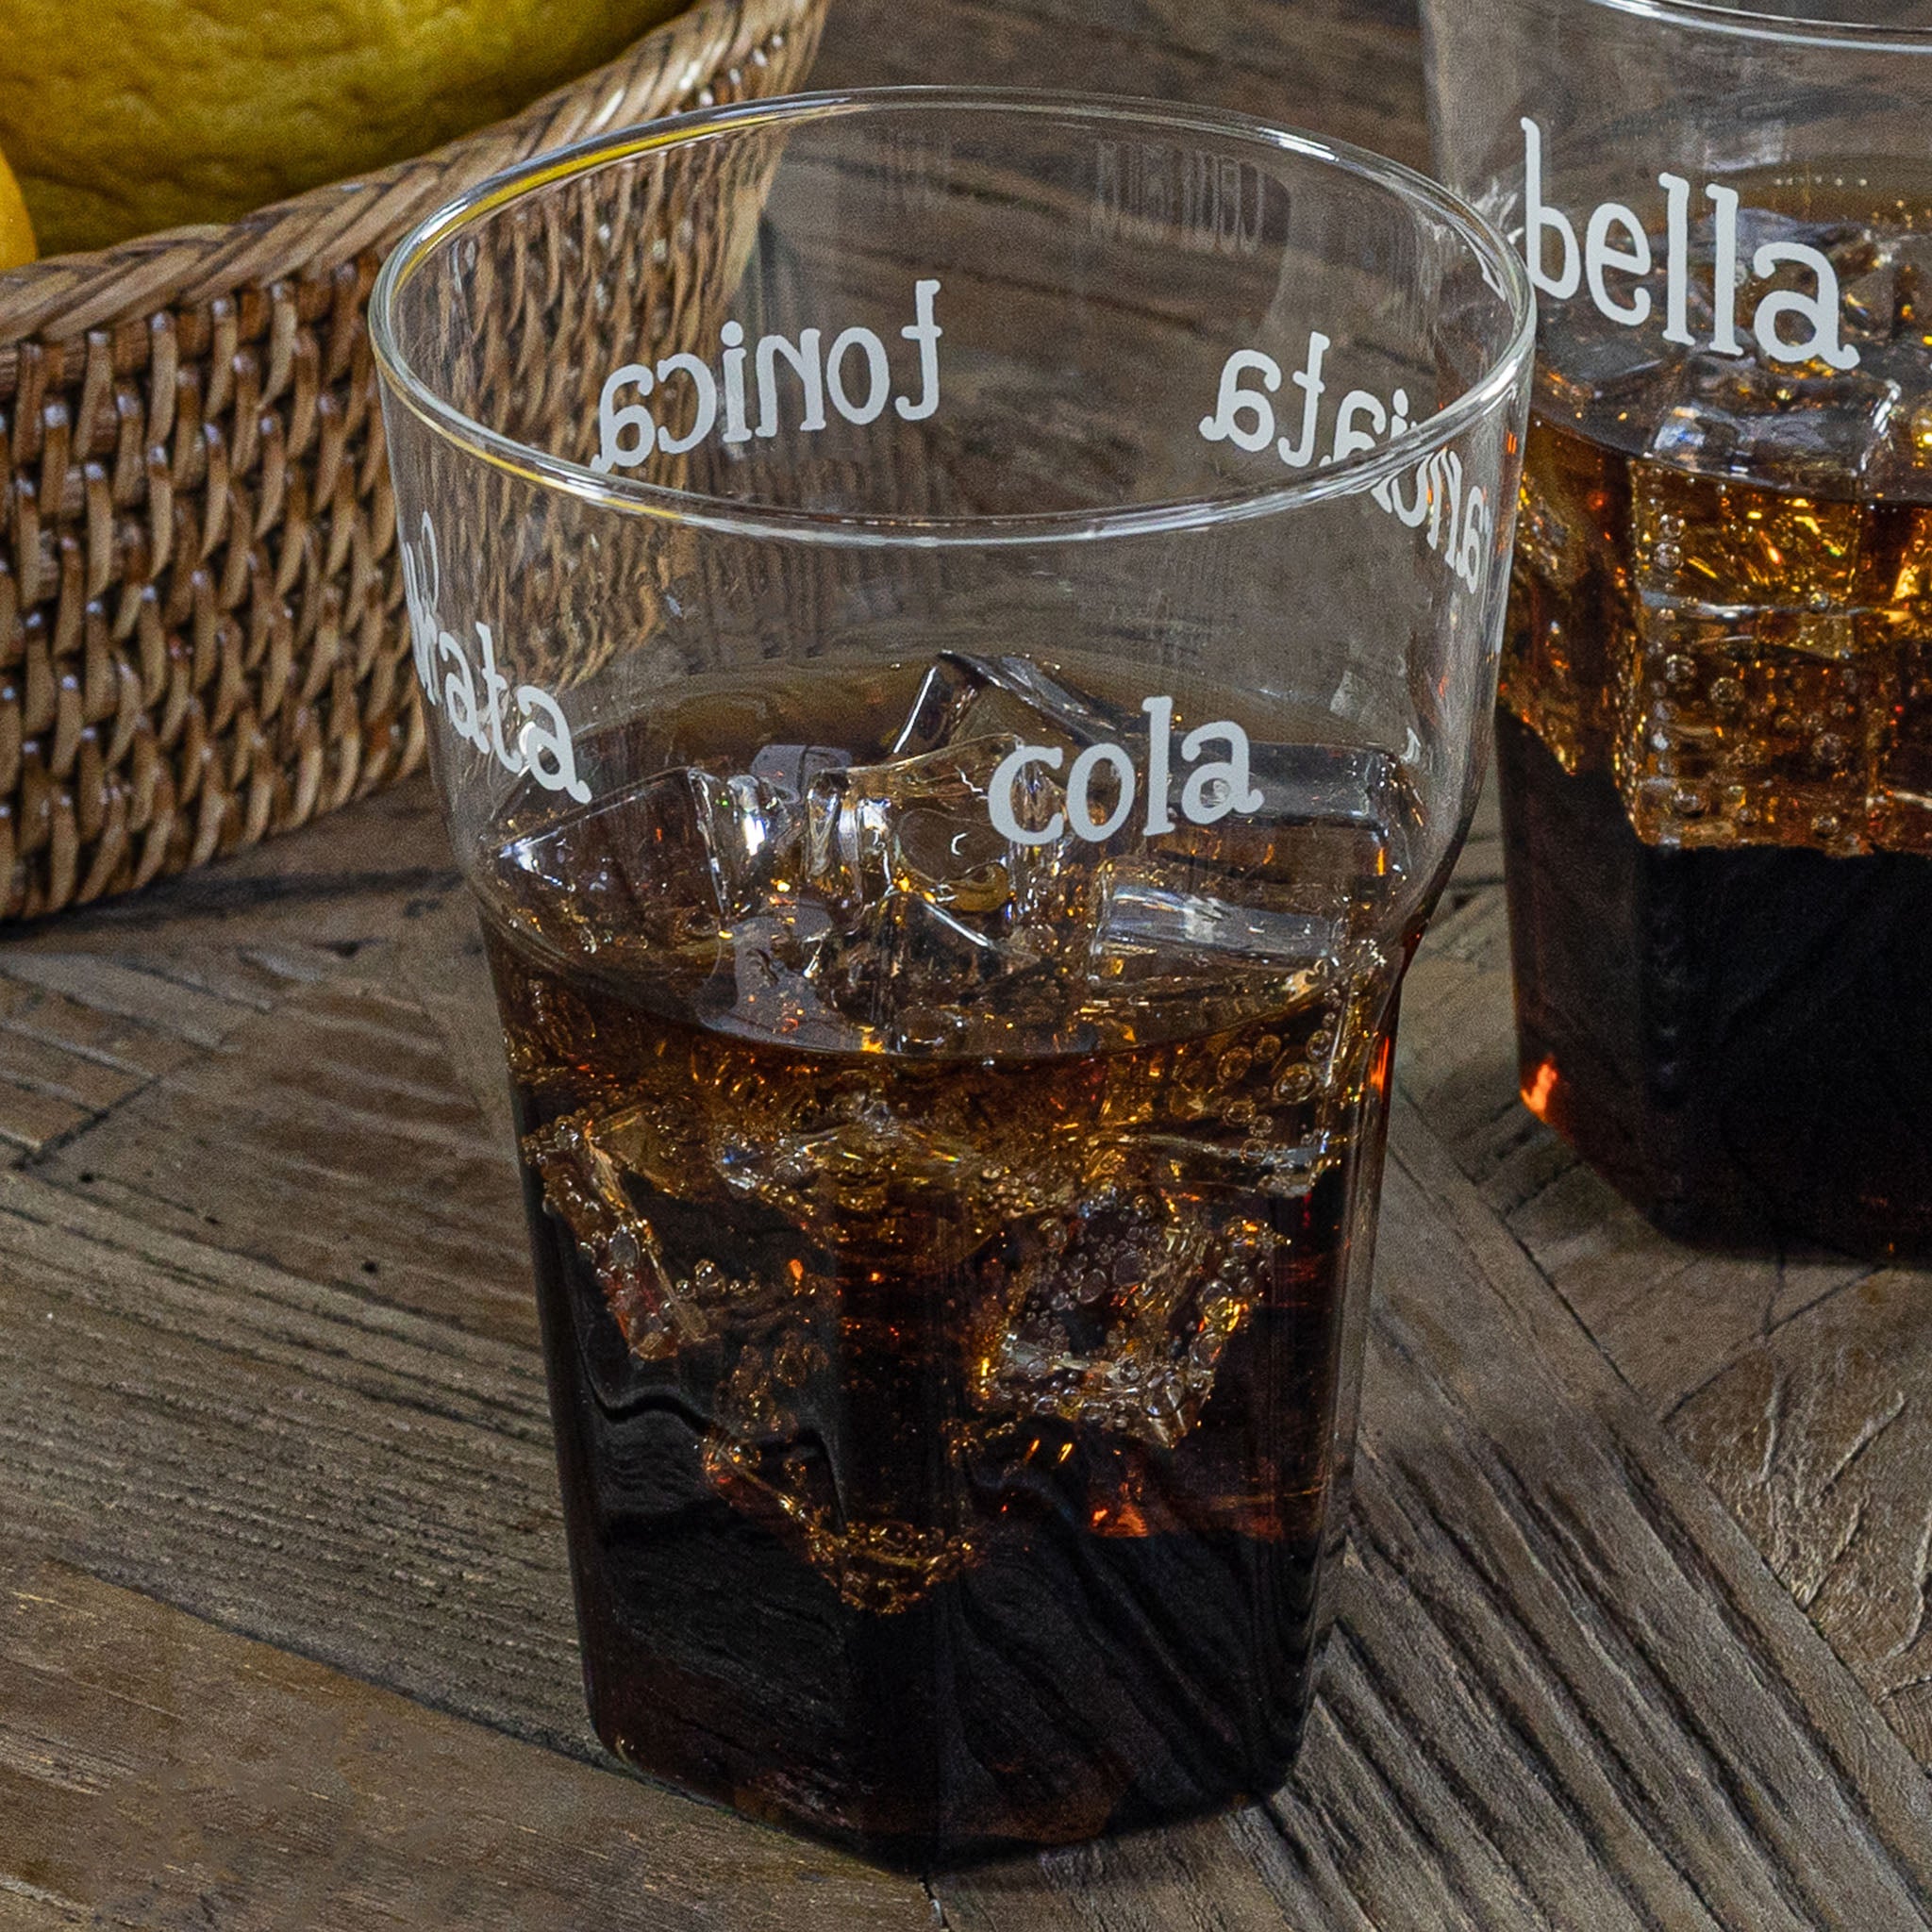 Cola Tonica Cedrata Aranciata Glass - Set of 2